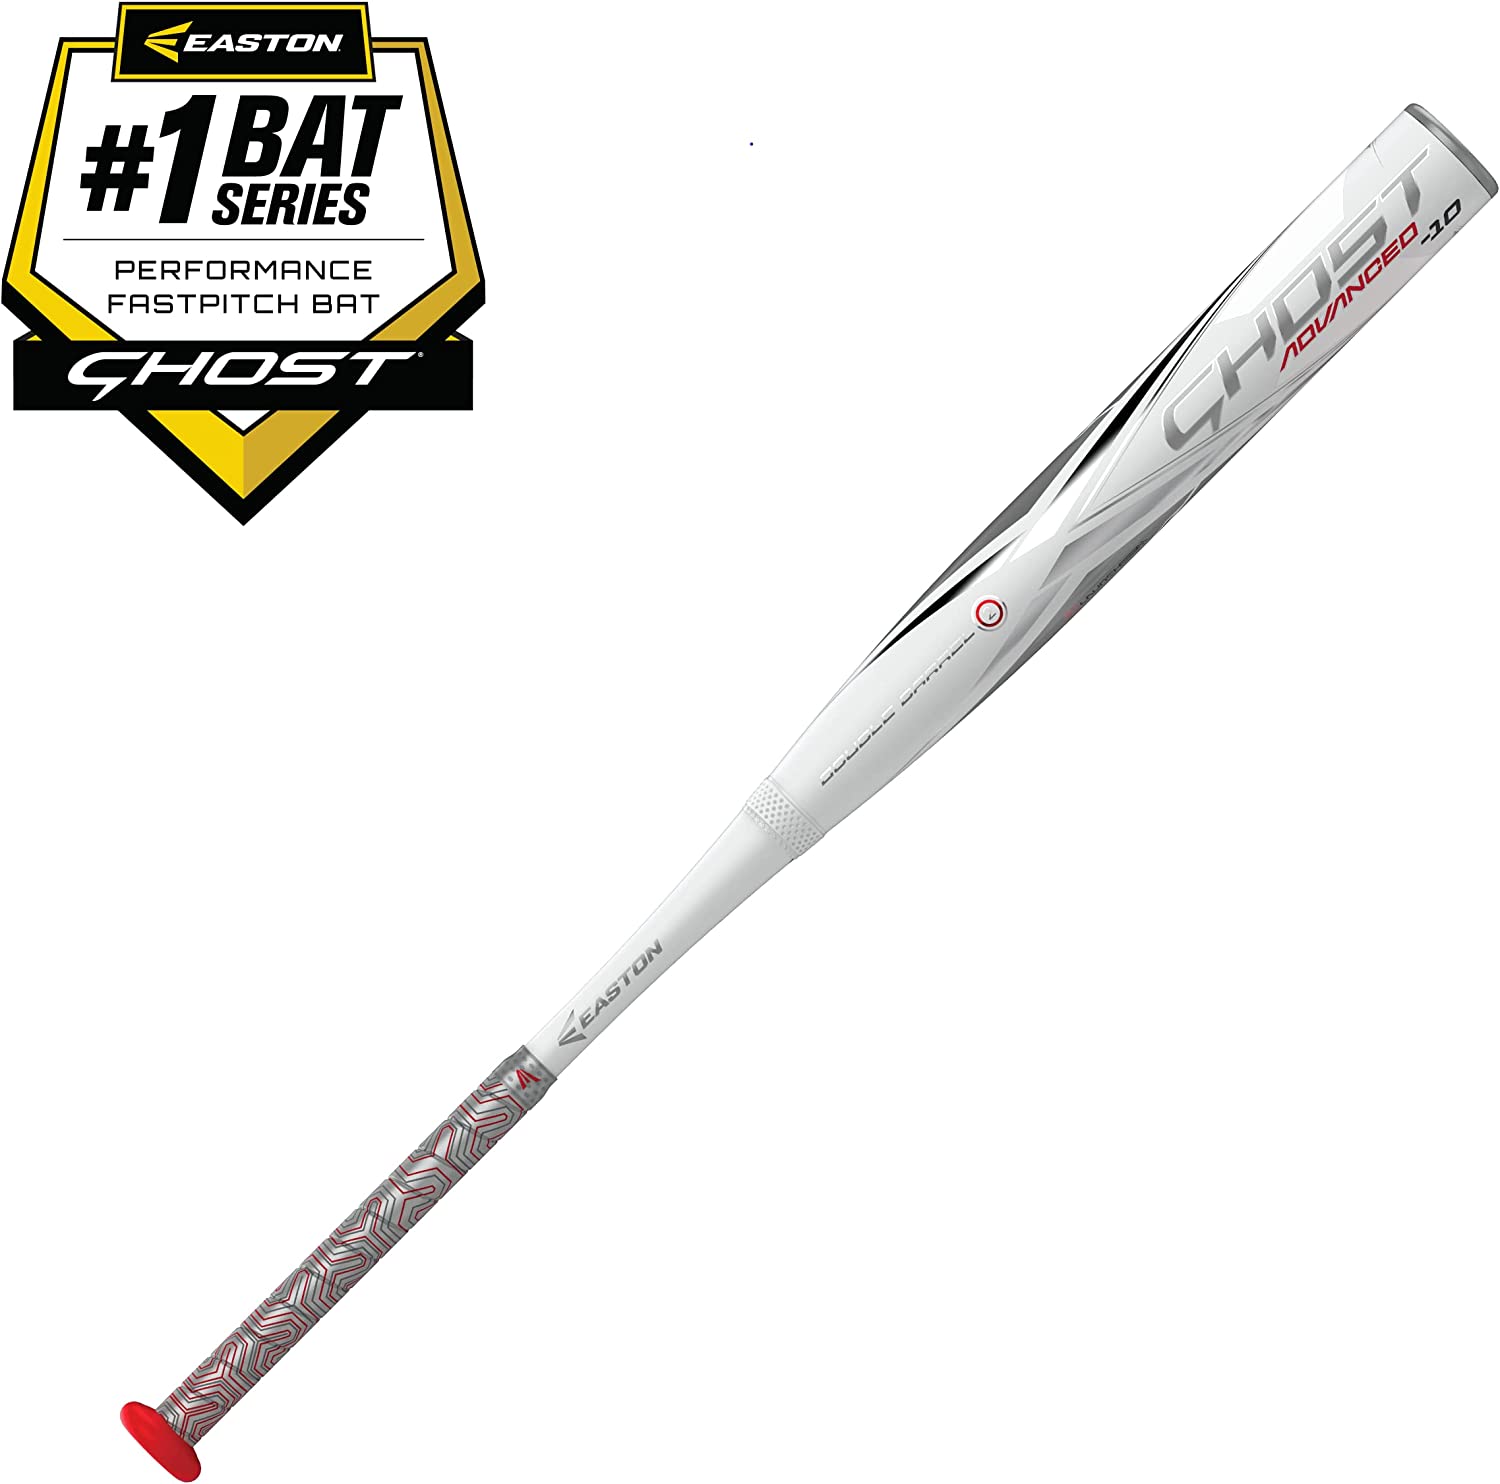 Easton GHOST ADVANCED Vibration Reducing Fastpitch Softball Bat